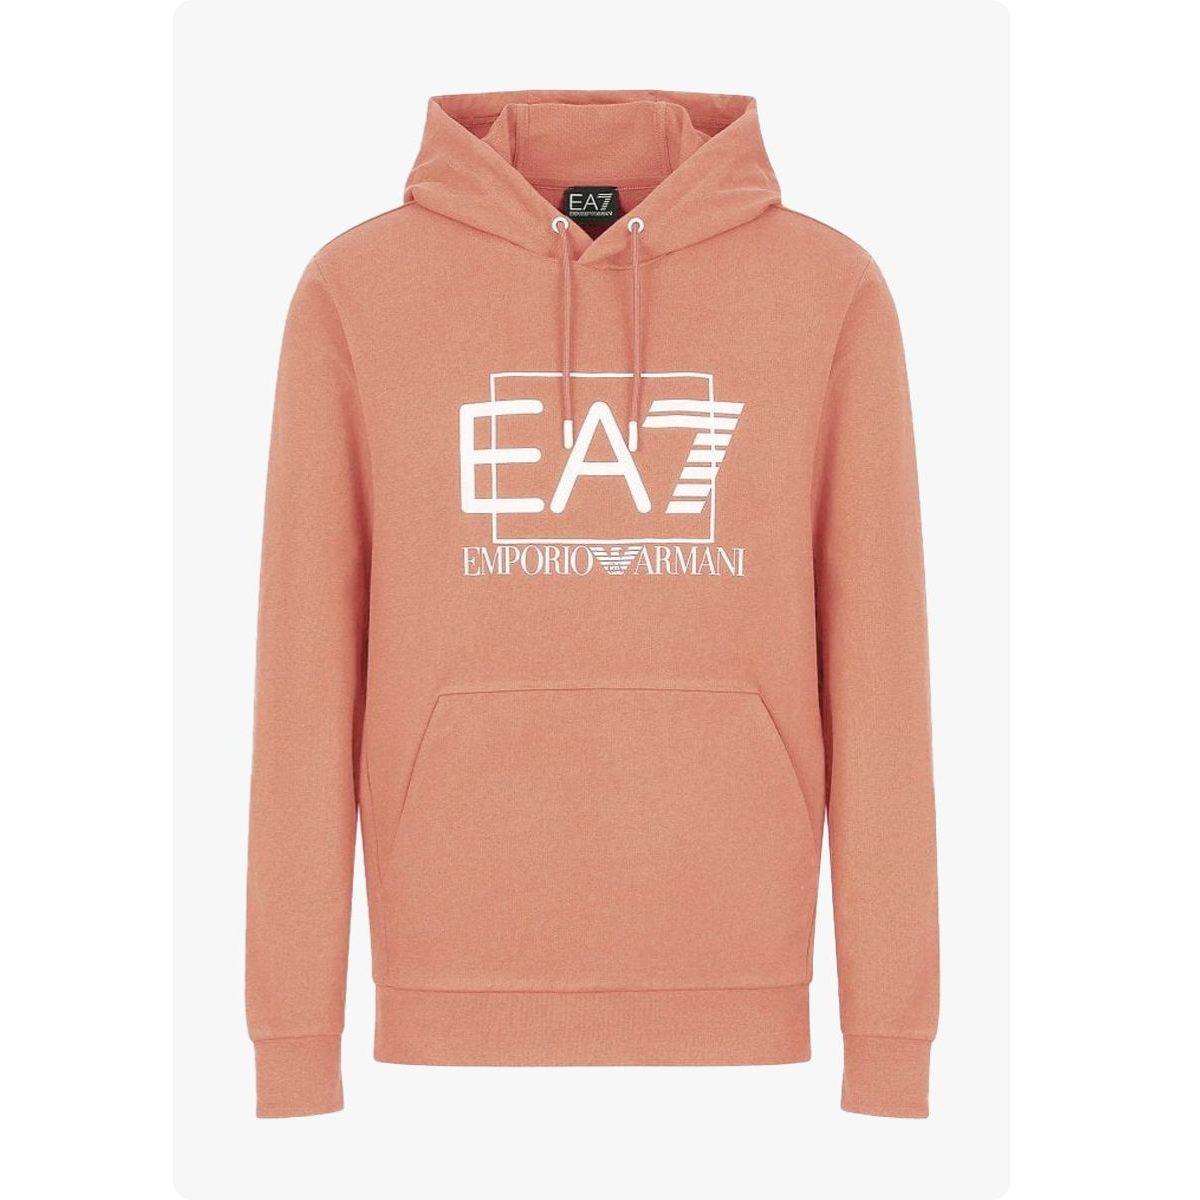 EA7 Giorgio Armani - Man Jersey Sweatshirt - Cafe Creme